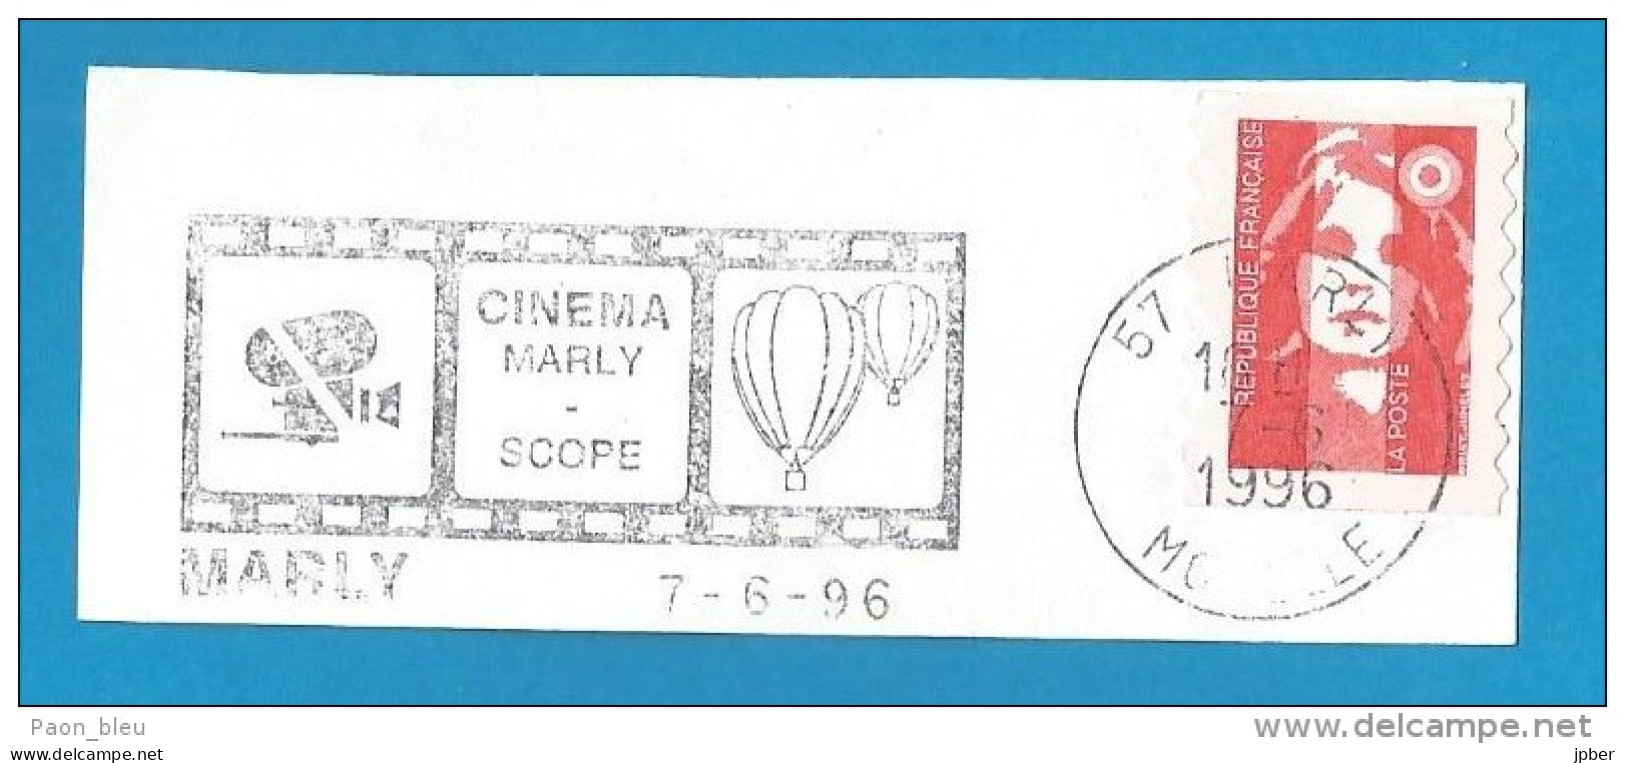 France - Flammes - Thème Aviation - Marly - Cinéma - Montgolfières - Ballons - Mechanical Postmarks (Advertisement)